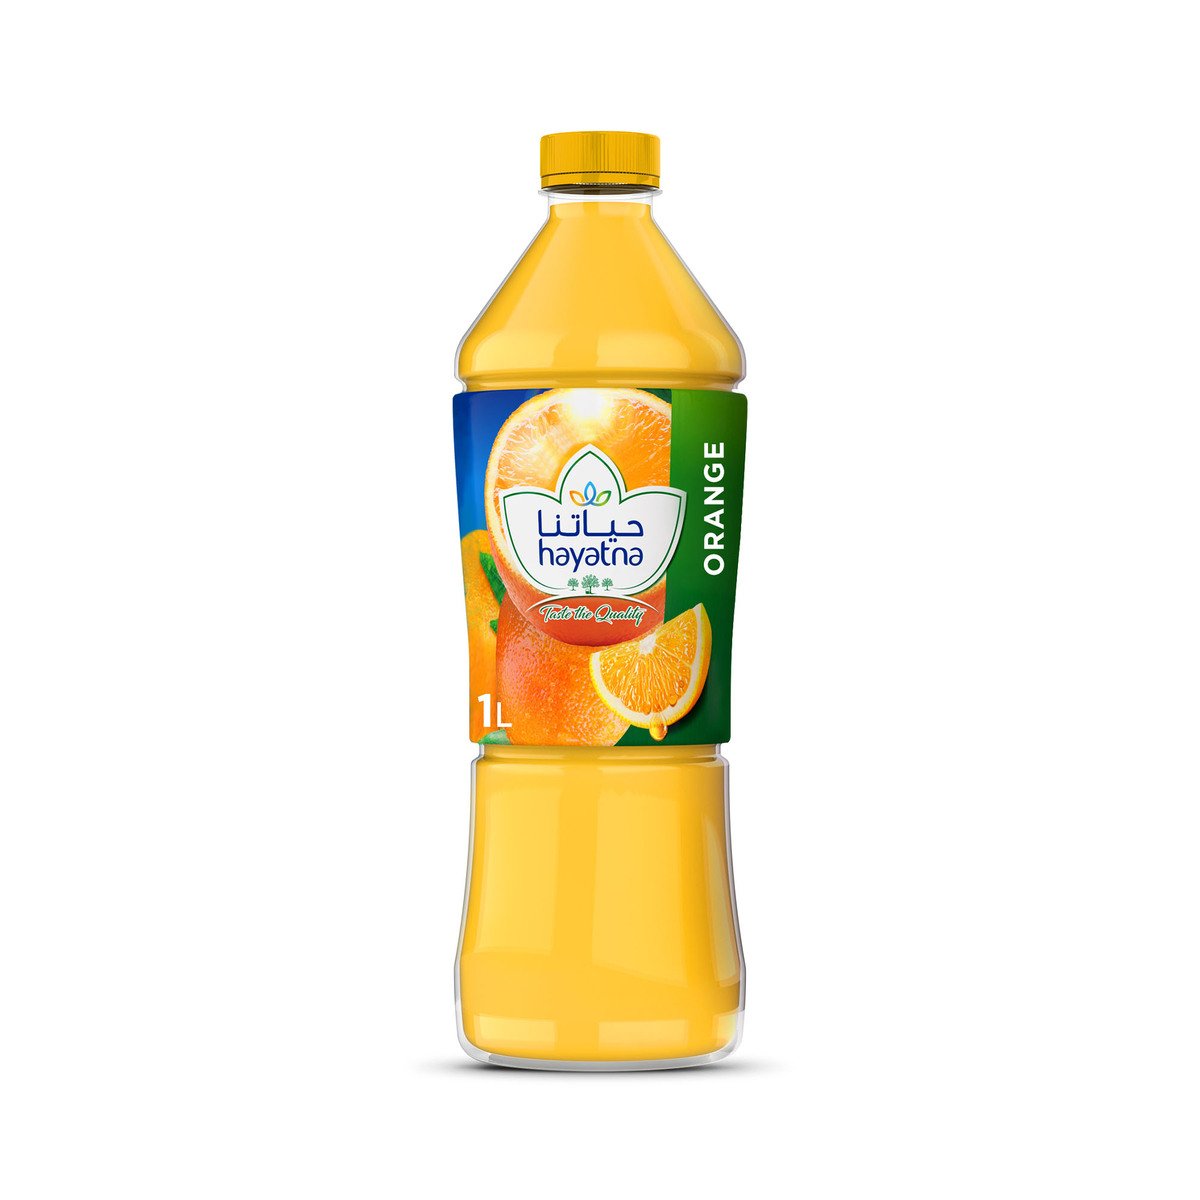 Hayatna No Added Sugar 100% Pure Orange Juice 1 Litre